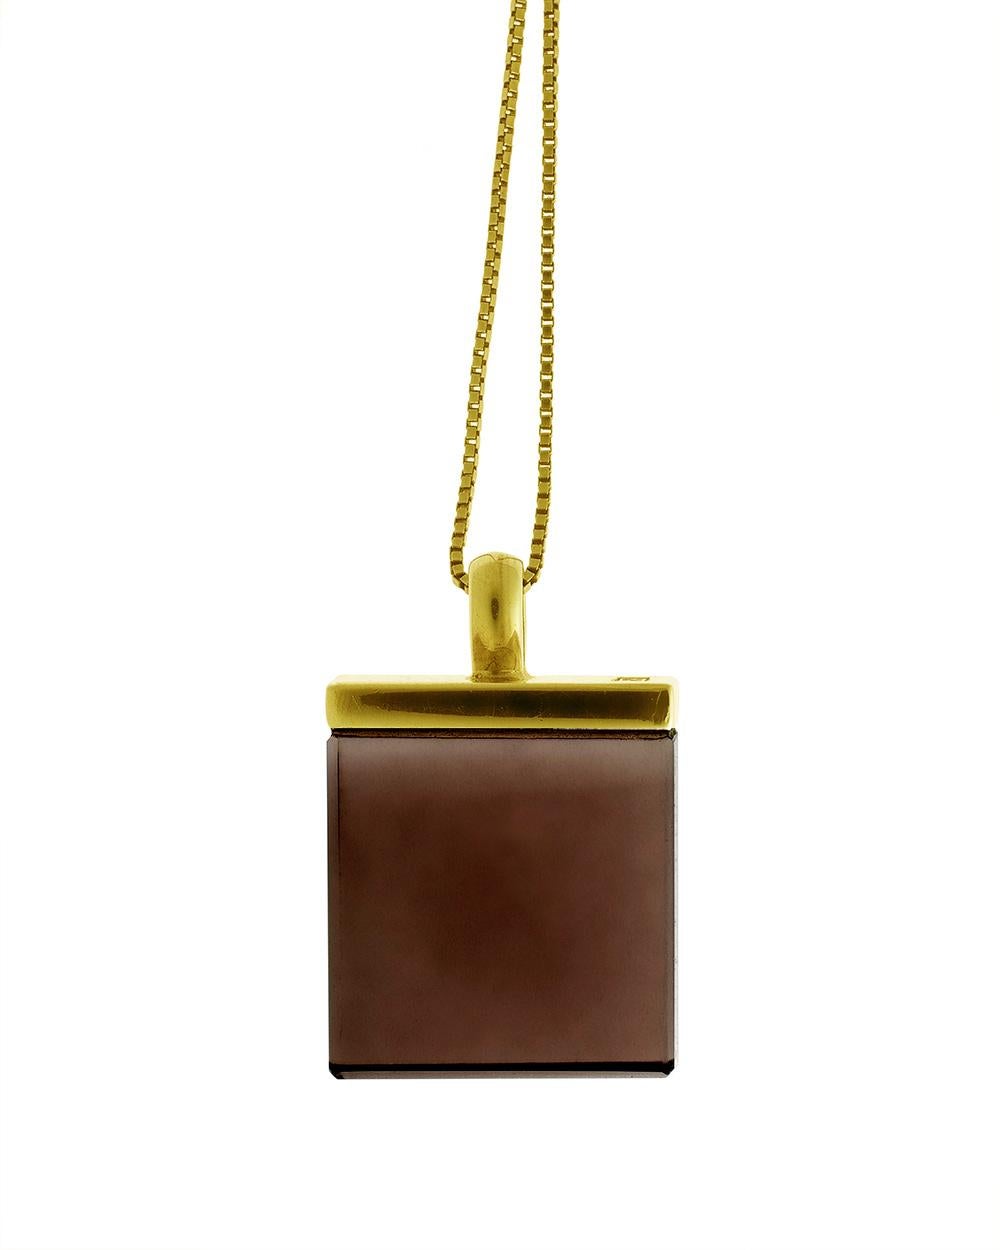 Eighteen Karat Rose Gold Art Deco Style Pendant Necklace with Smoky Quartz For Sale 5